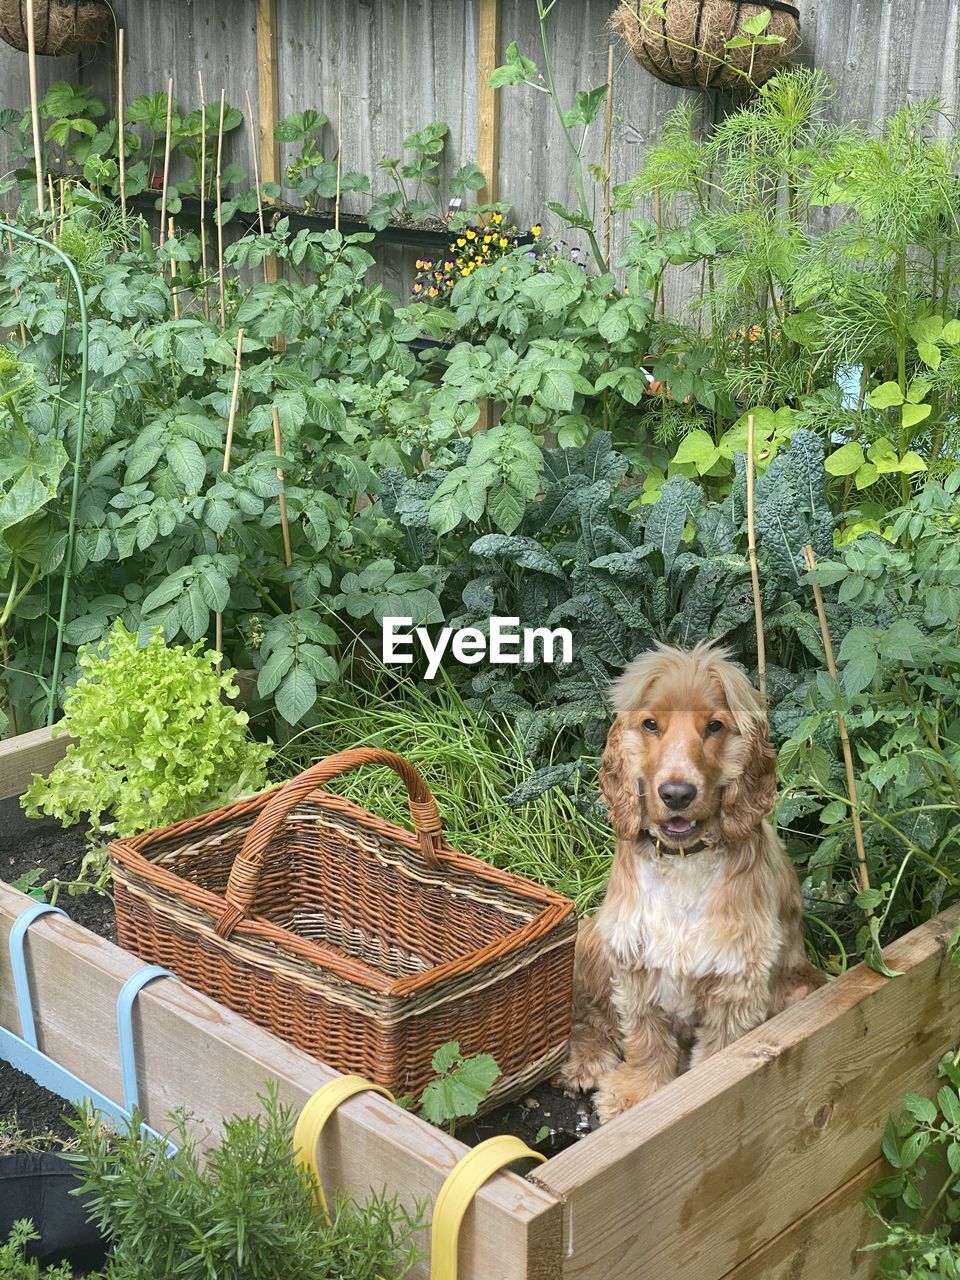 Smiling cocker spaniel dog helping to harvest the vegetable beds